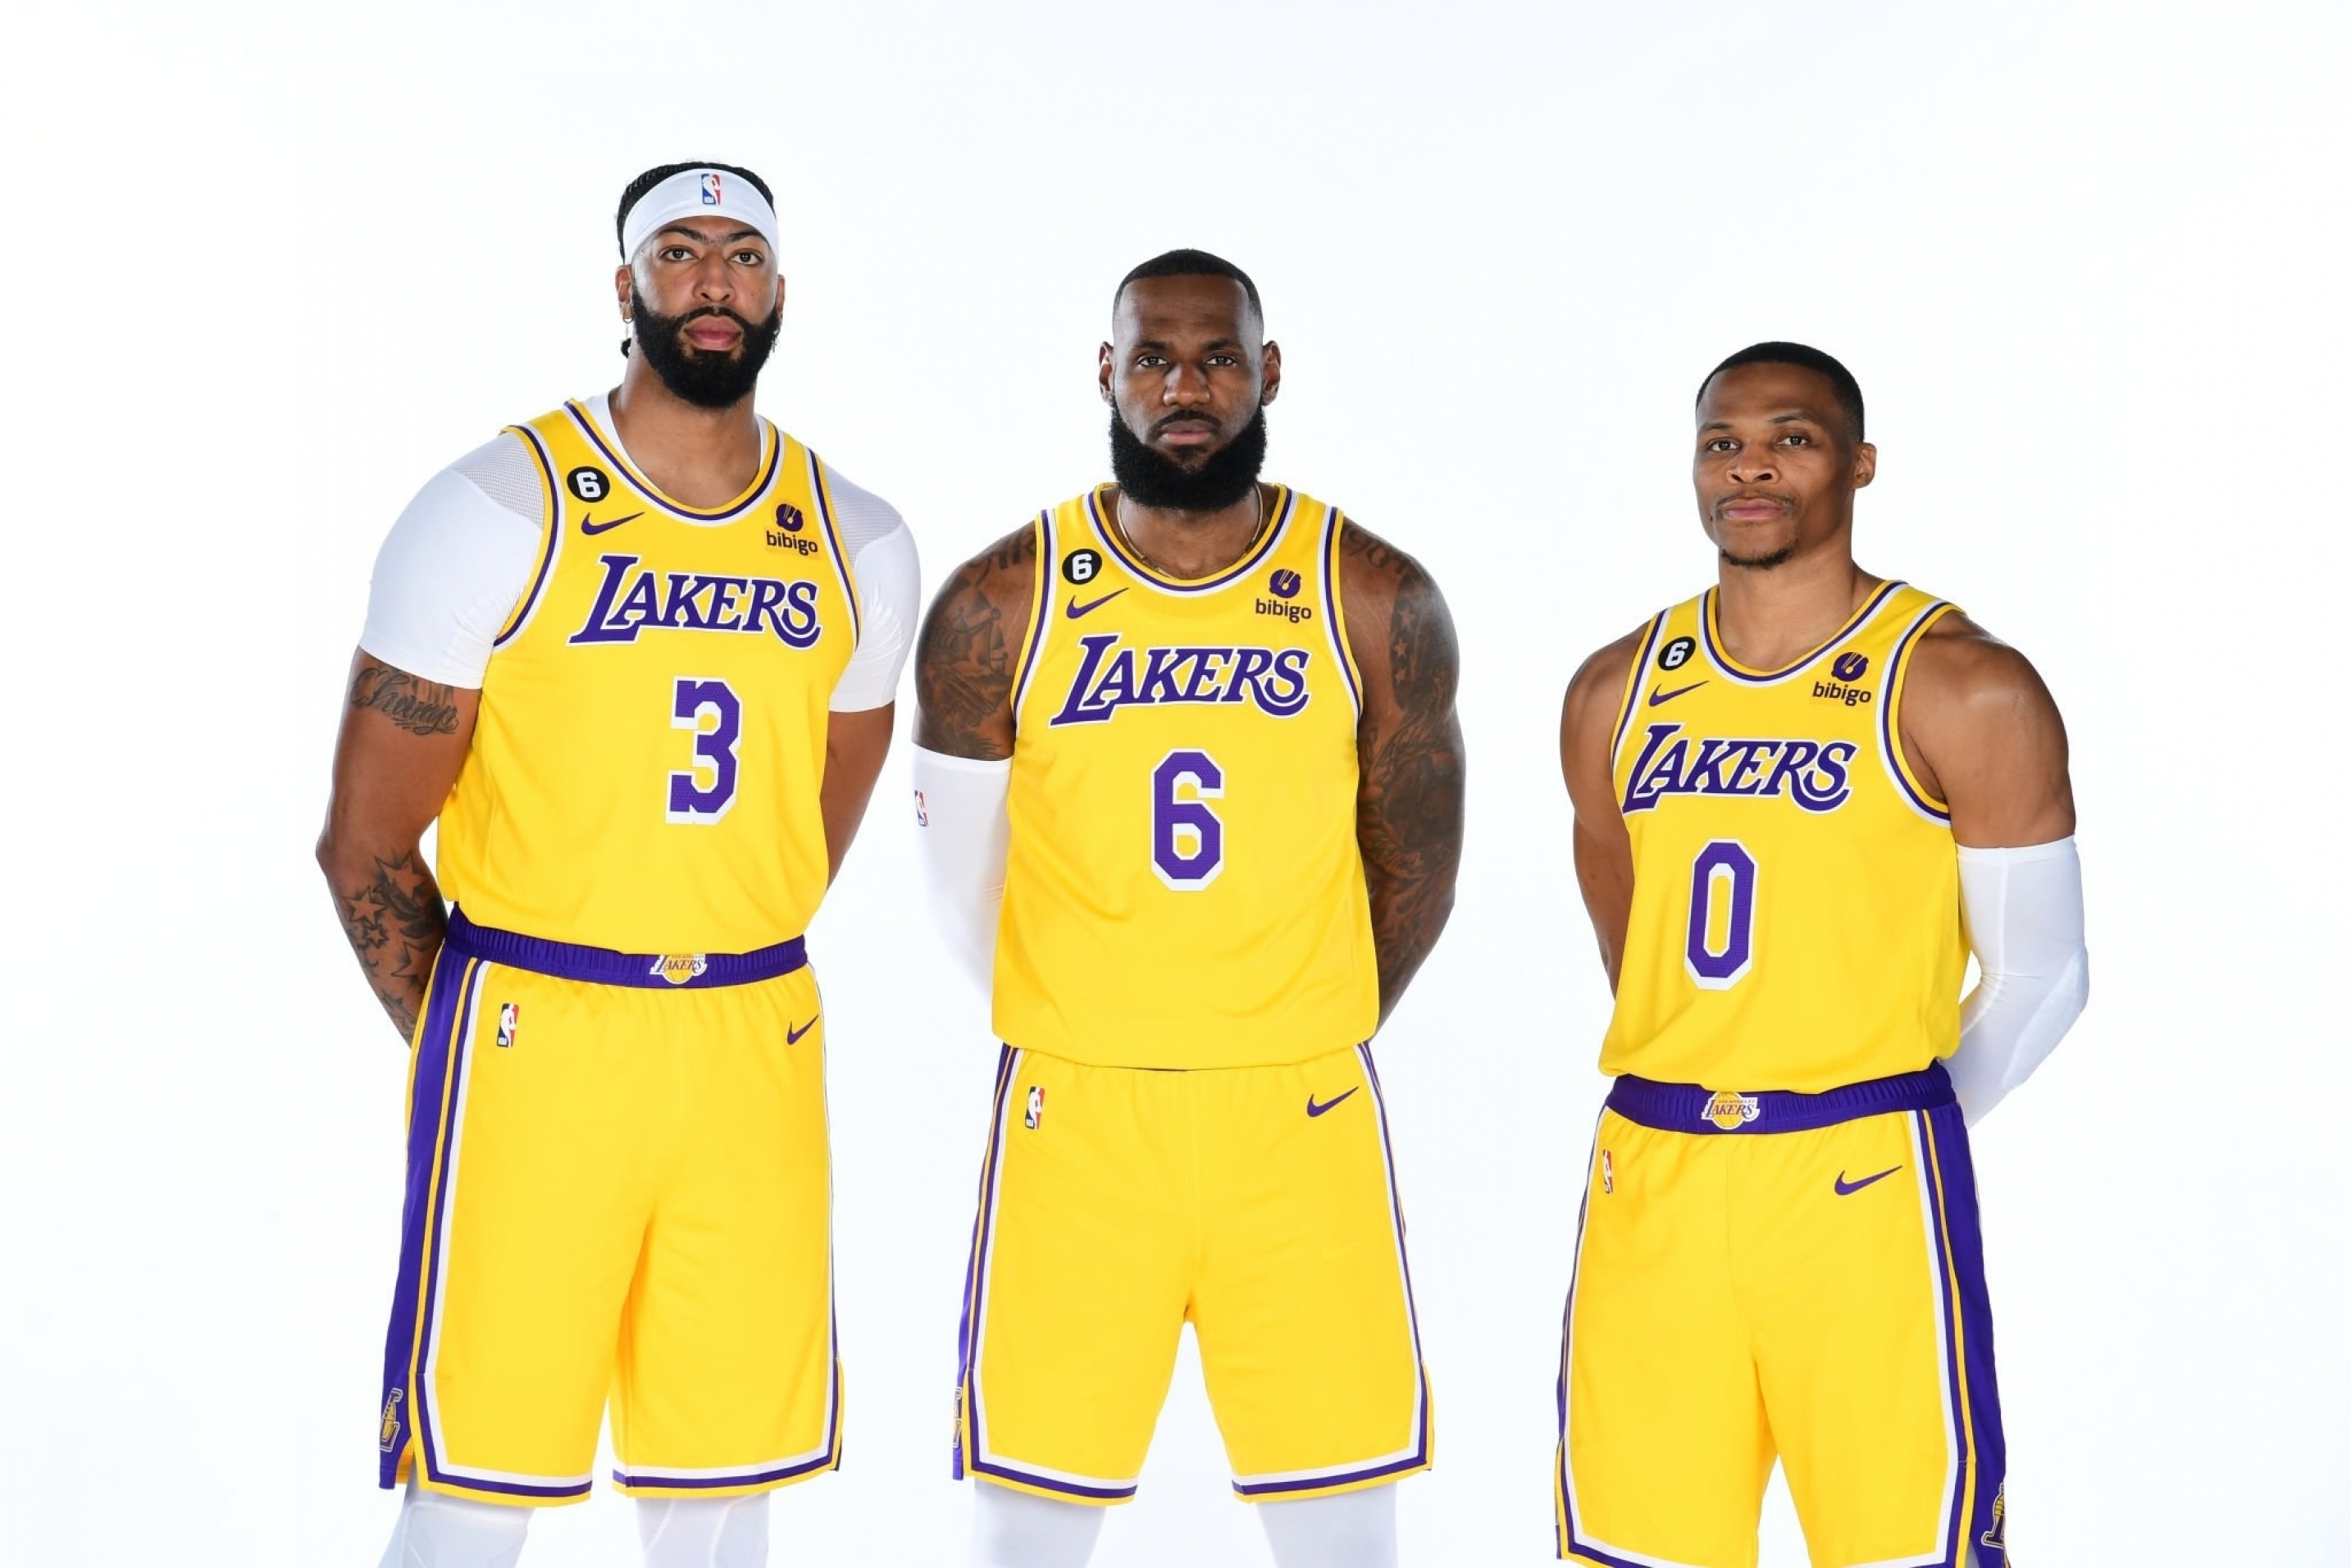 Sports Los Angeles Lakers HD Wallpaper